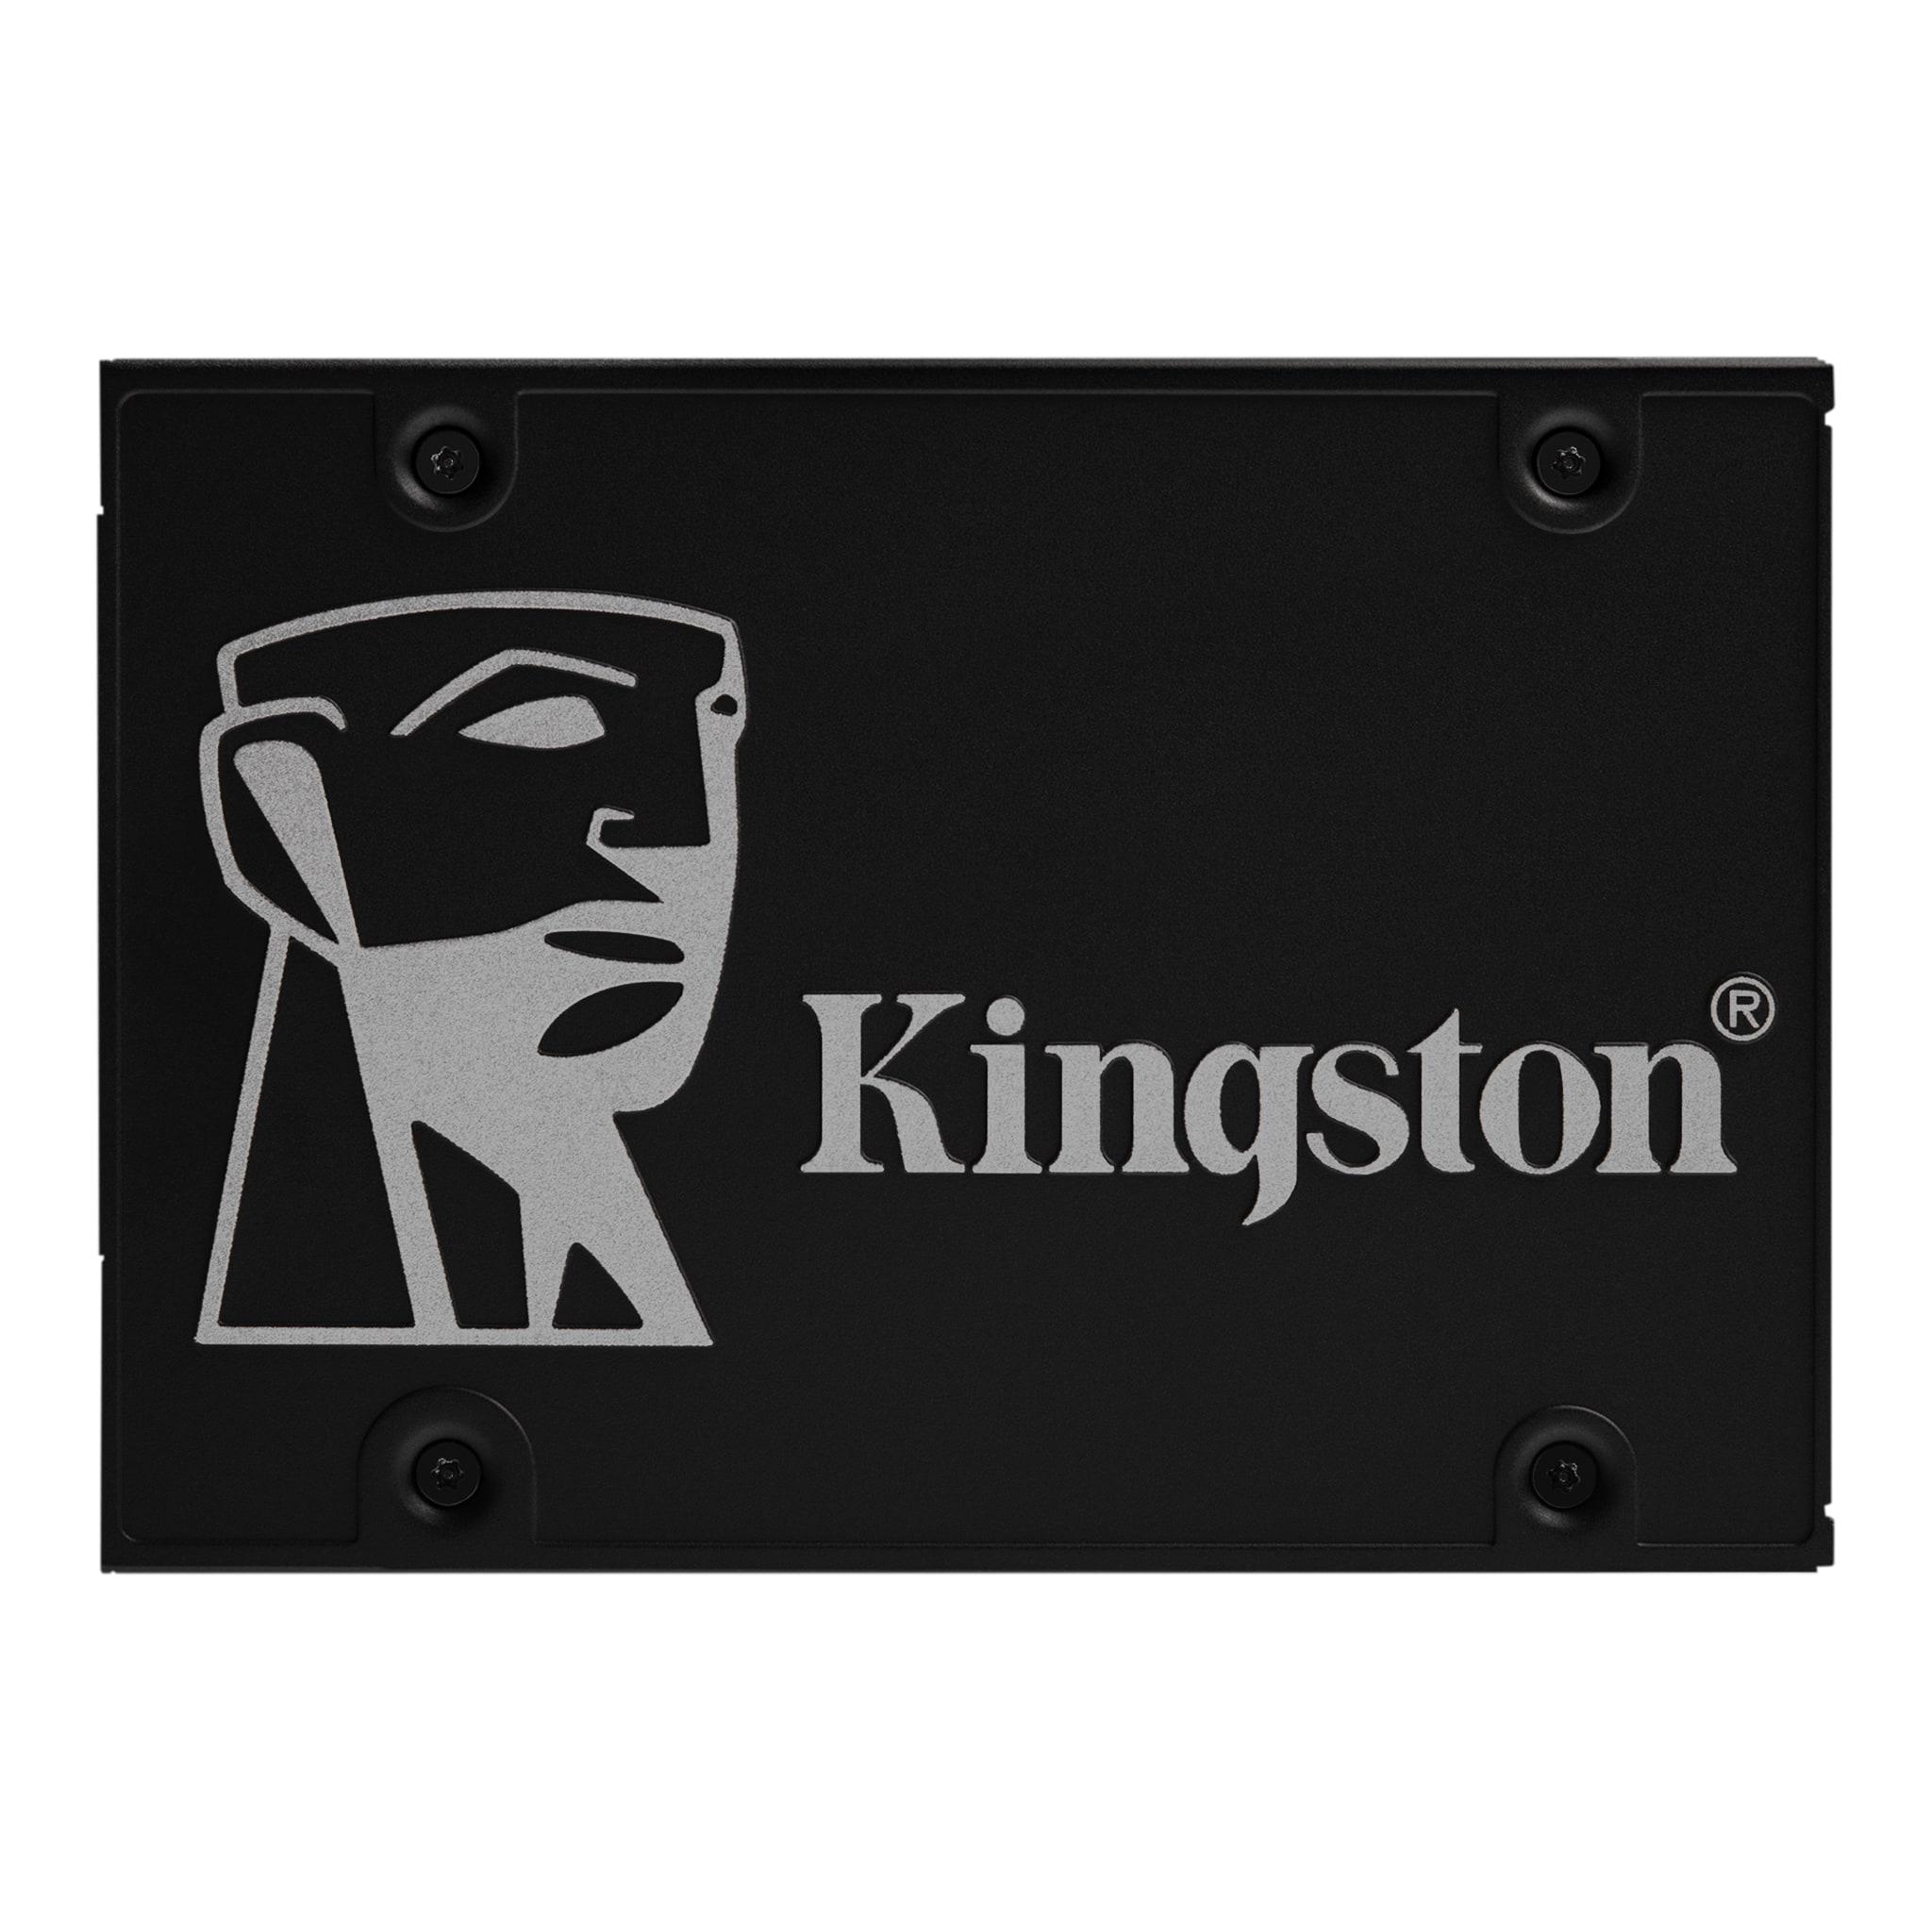 Solid State Drive (SSD) Kingston KC600 2 TB-1